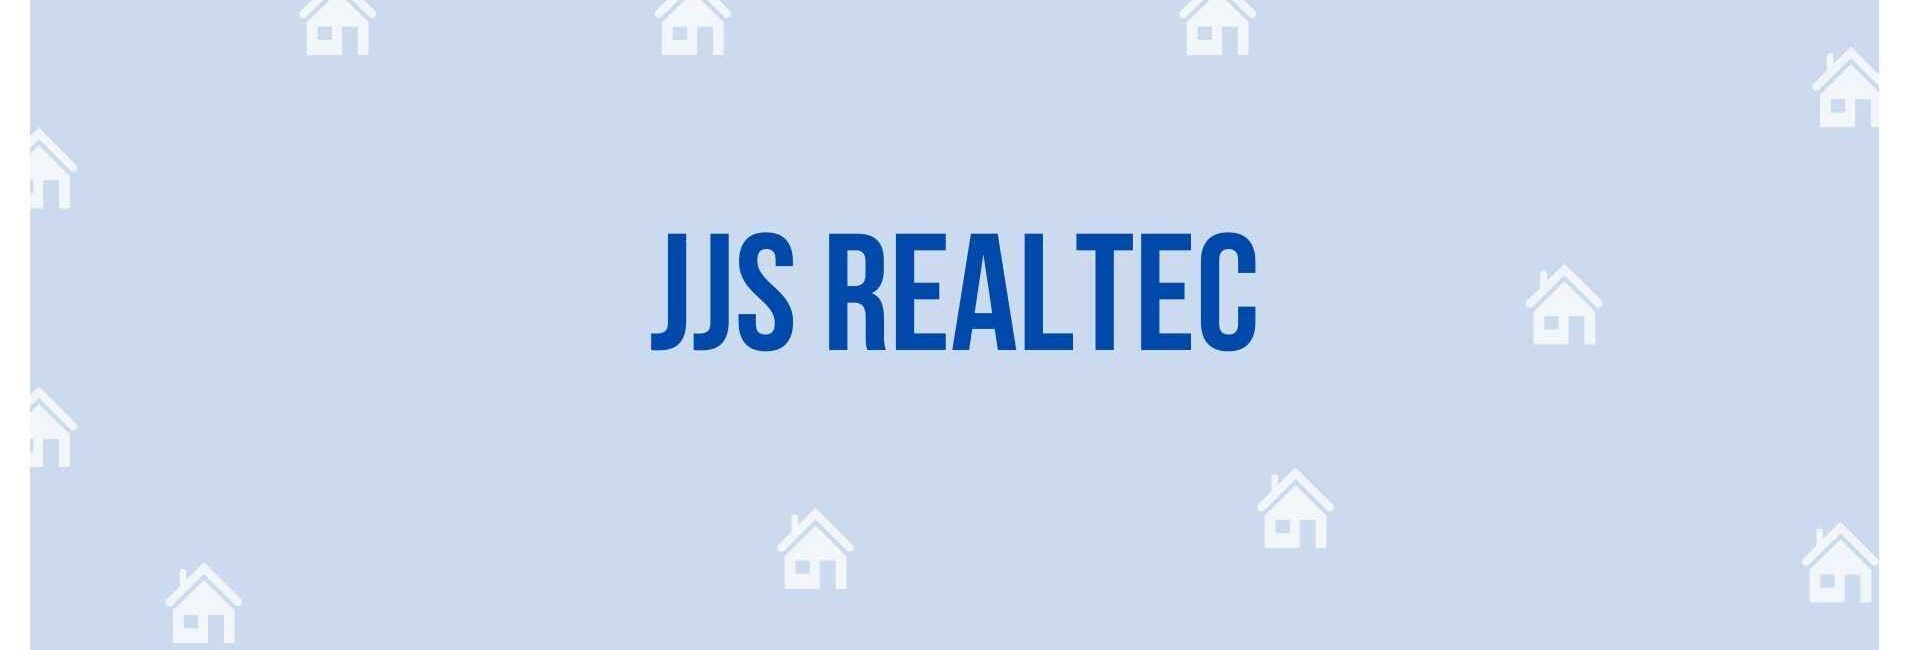 JJS Realtec - Property Dealer in Noida